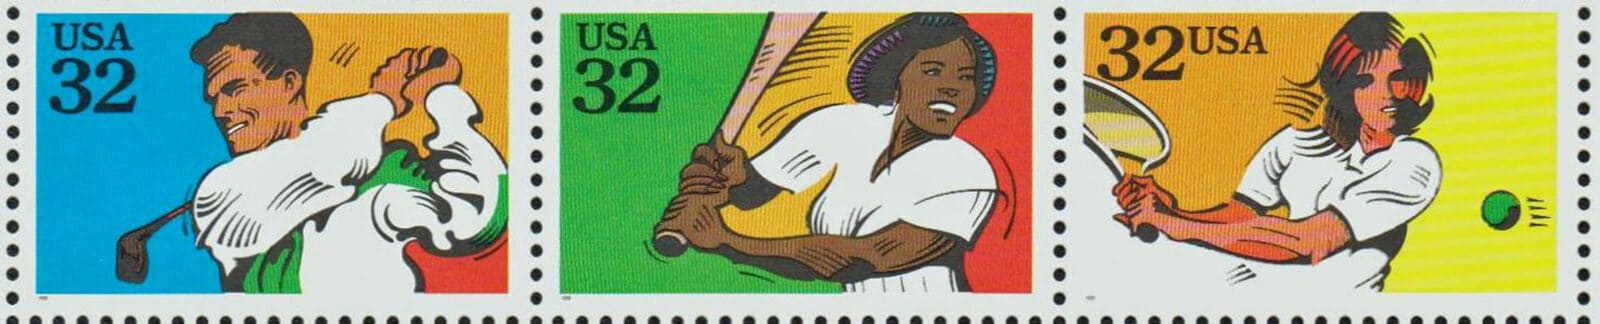 Recreational Sports, U.S. Postage Stamps - header